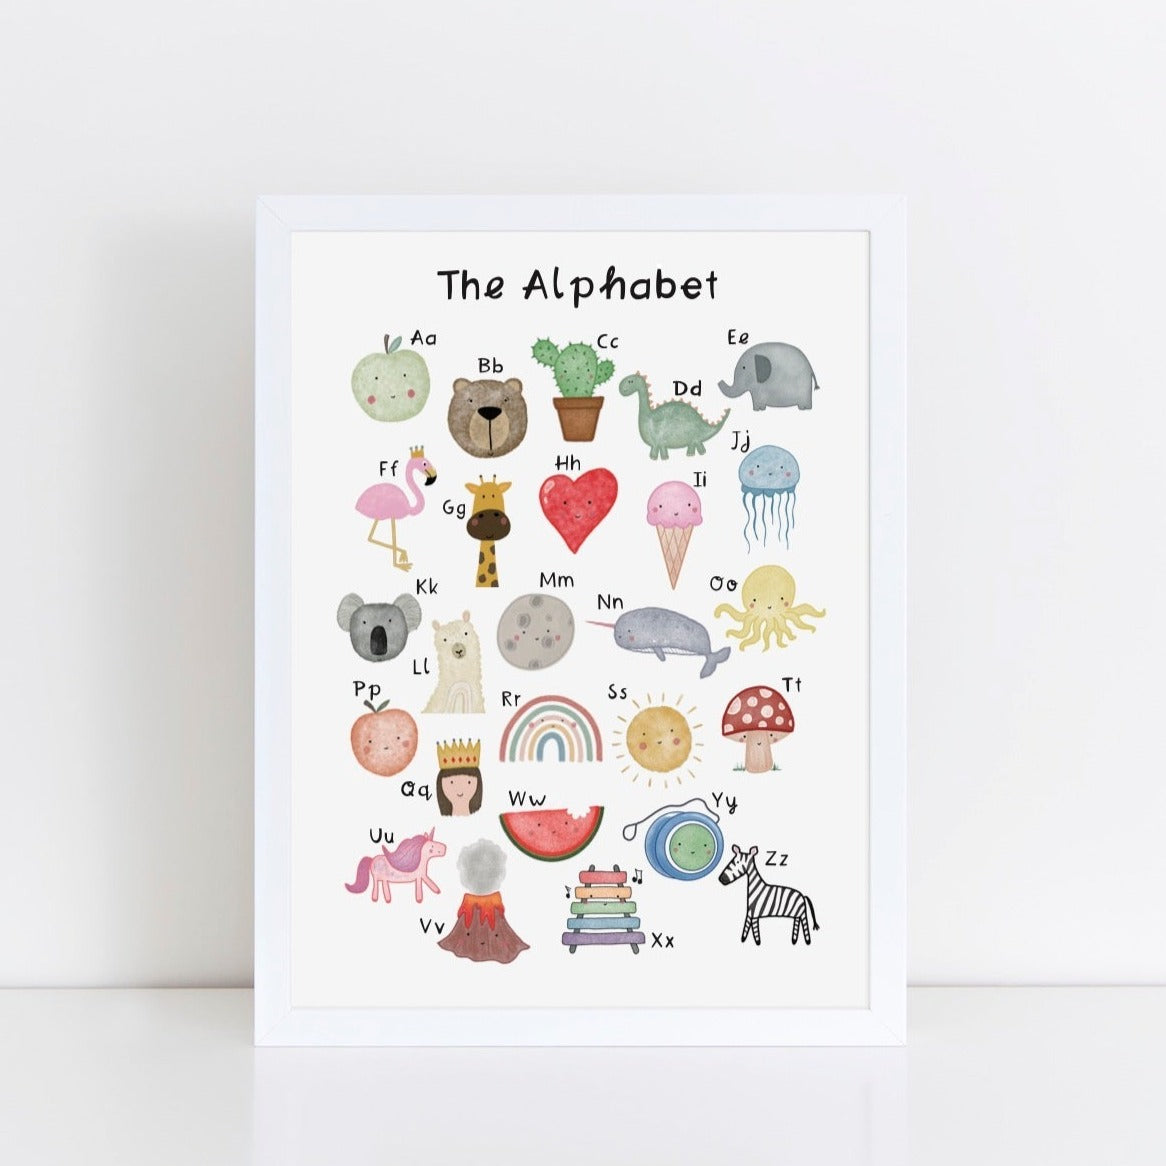 The Alphabet Art Print by The Little Jones (15 Sizes Available)